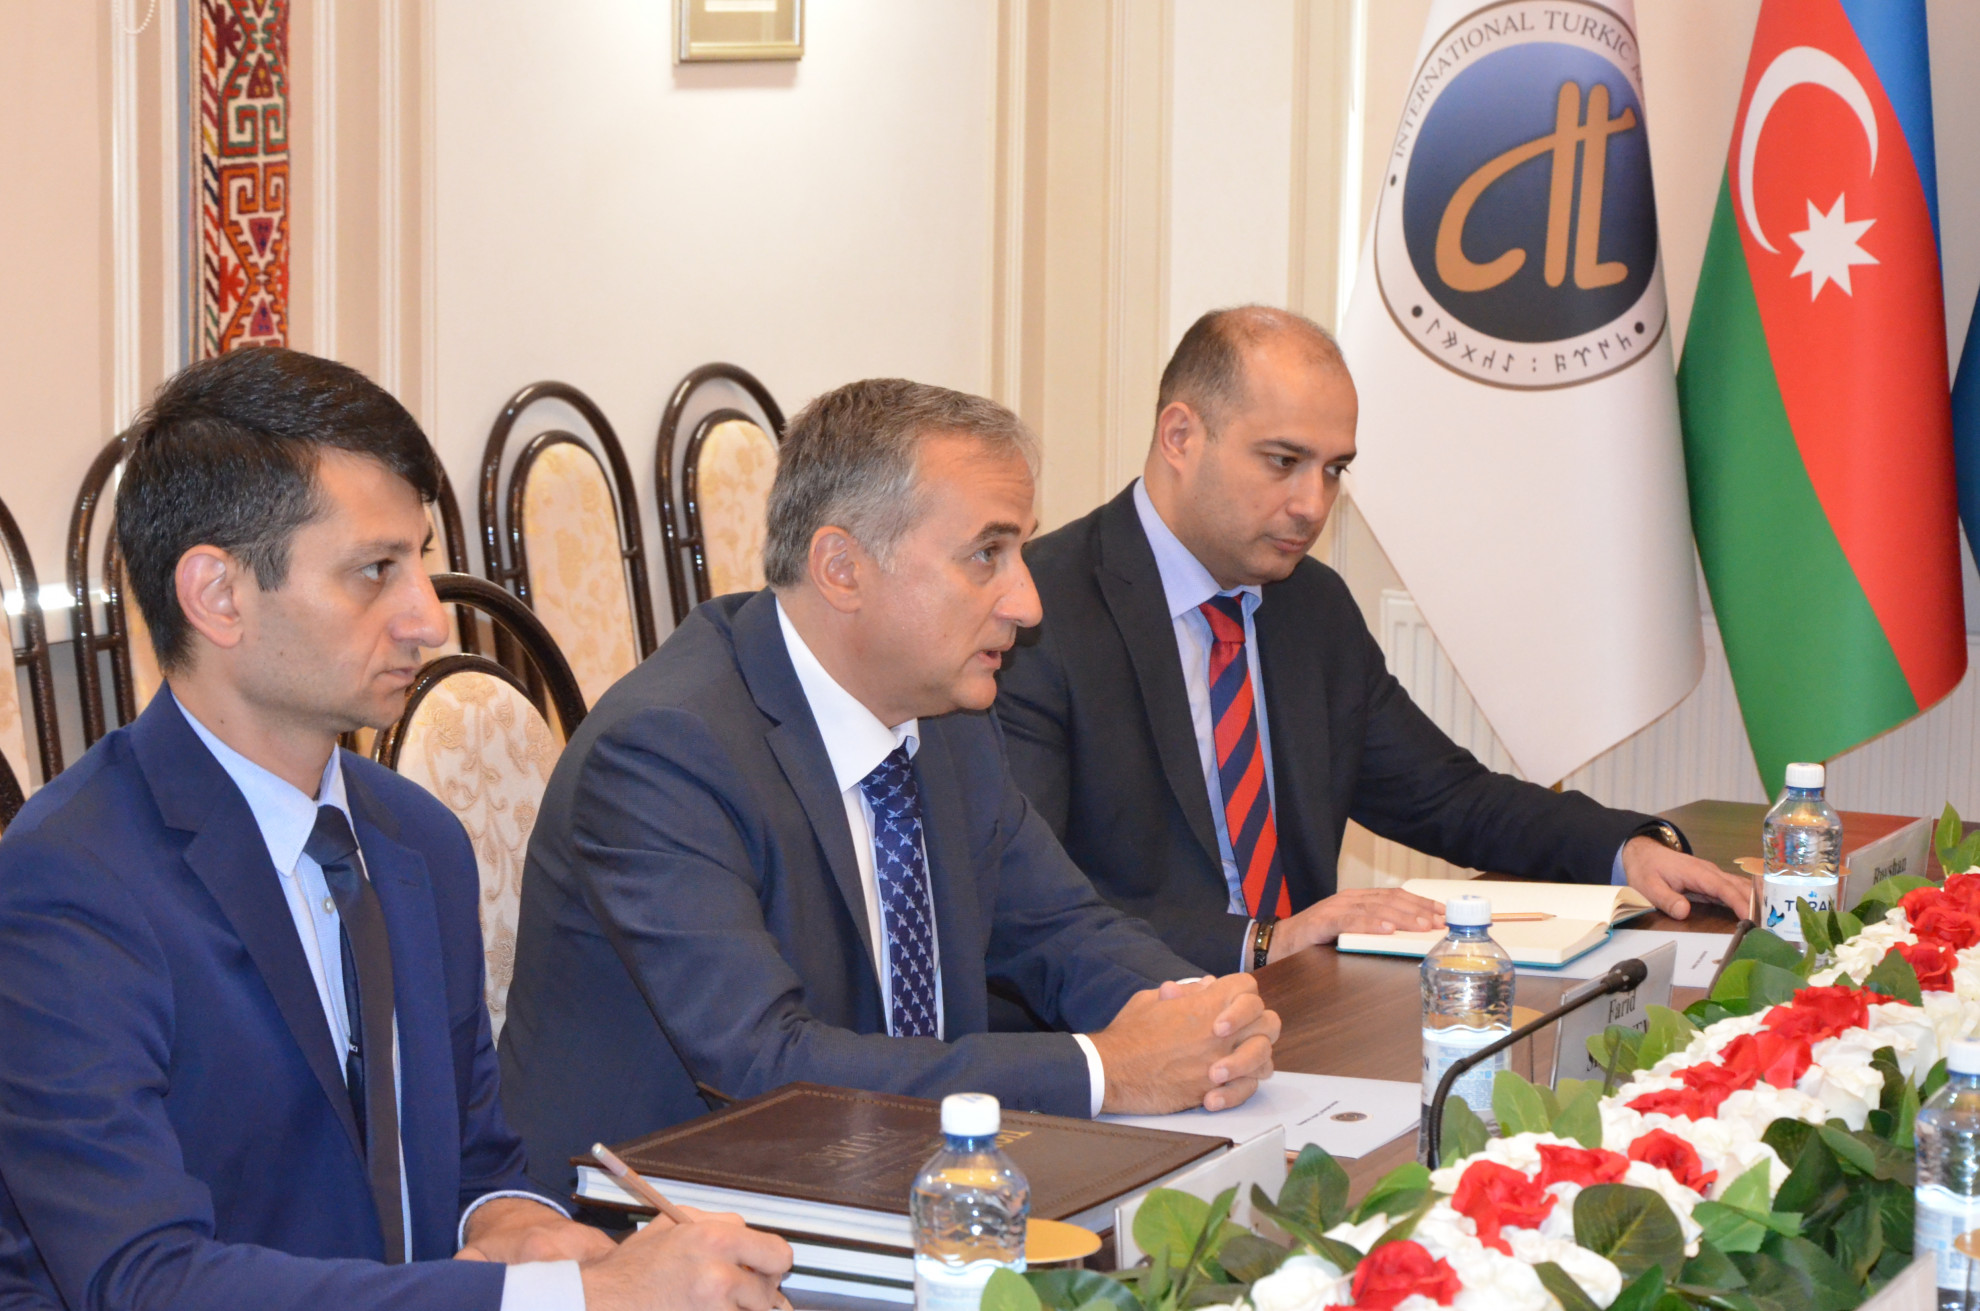 The AIR Center delegation held meetings in Kazakhstan